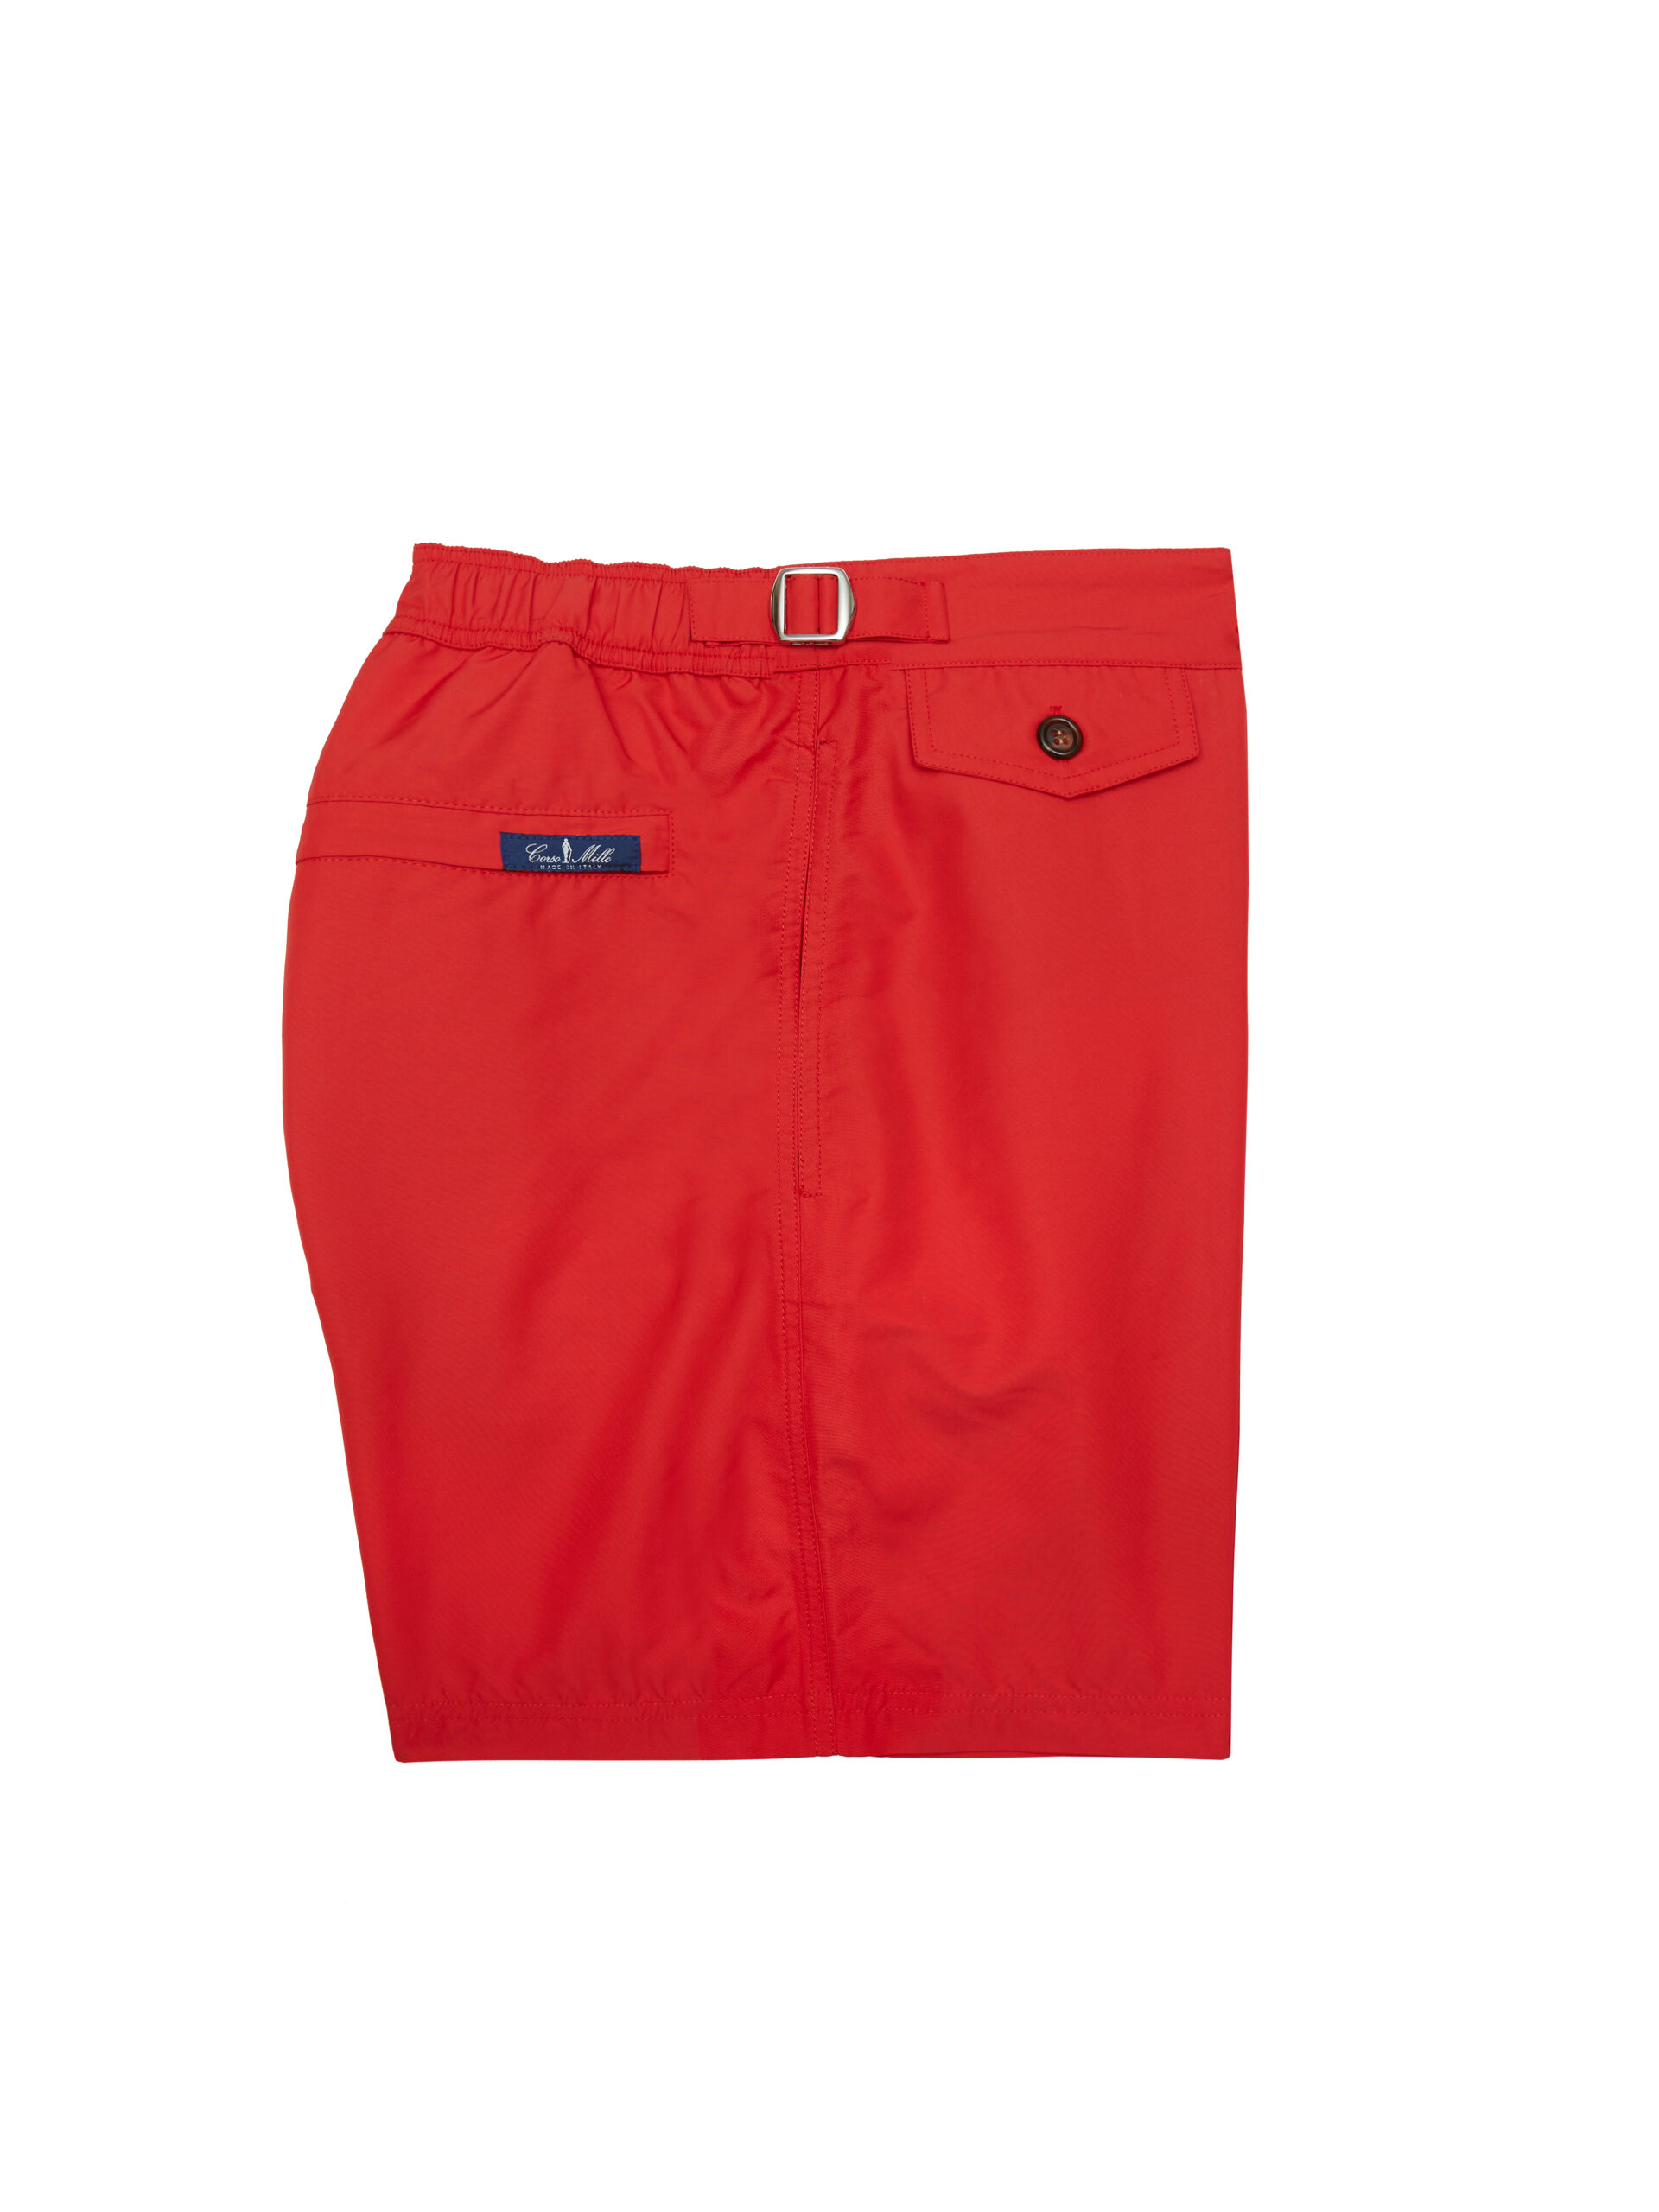 corsa red swim shorts 2